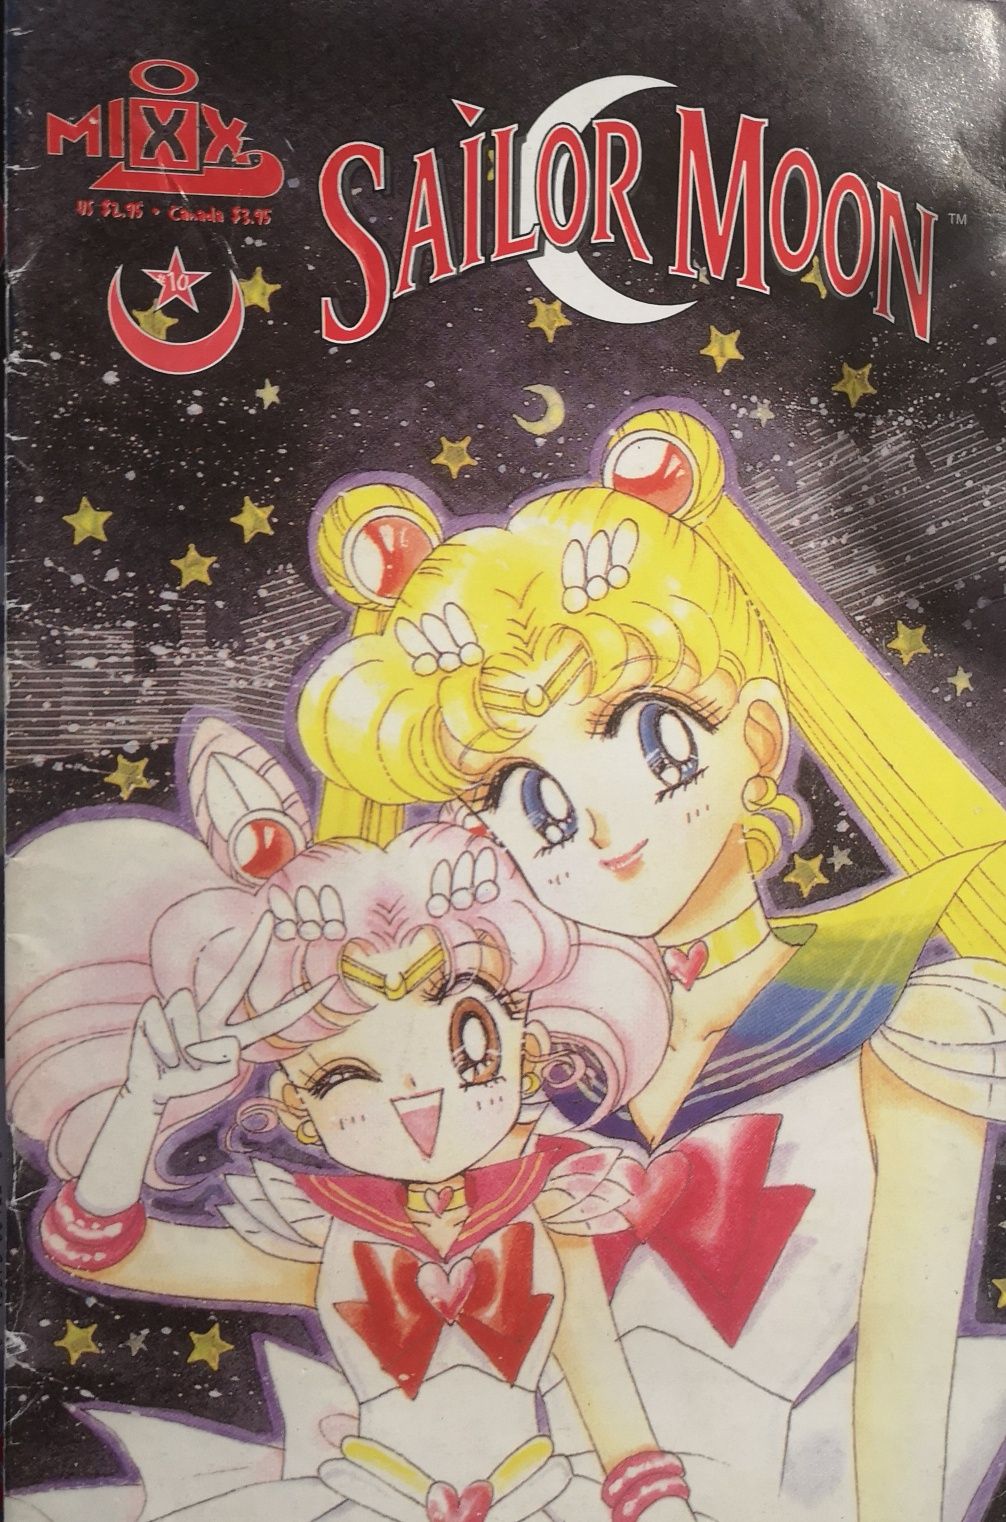 Komiksy Manga Gazetki Zestaw Sailor Moon Mixx Zine